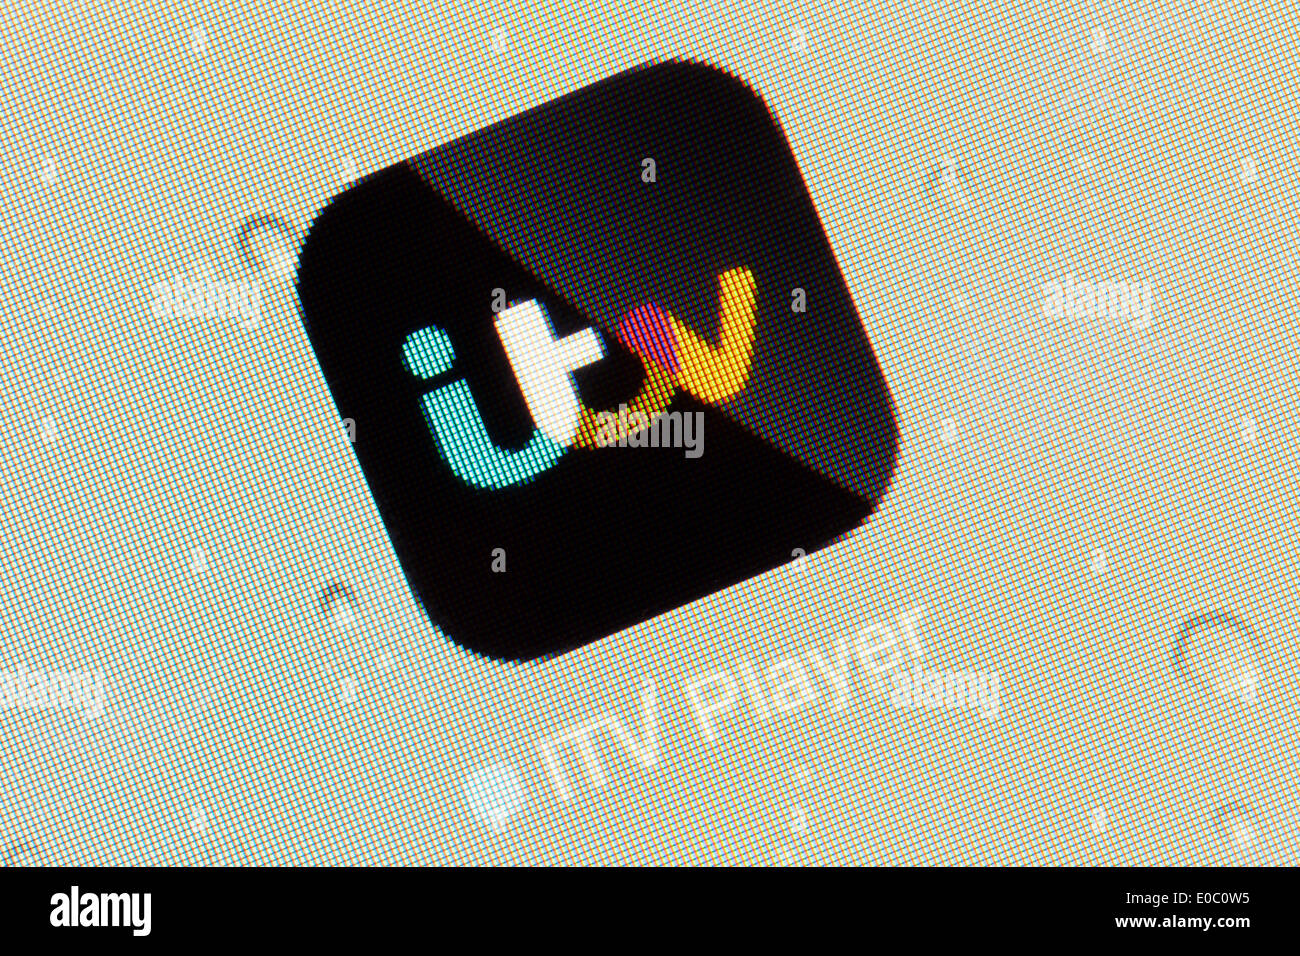 ITV player app icon logo on an iPad Stock Photo